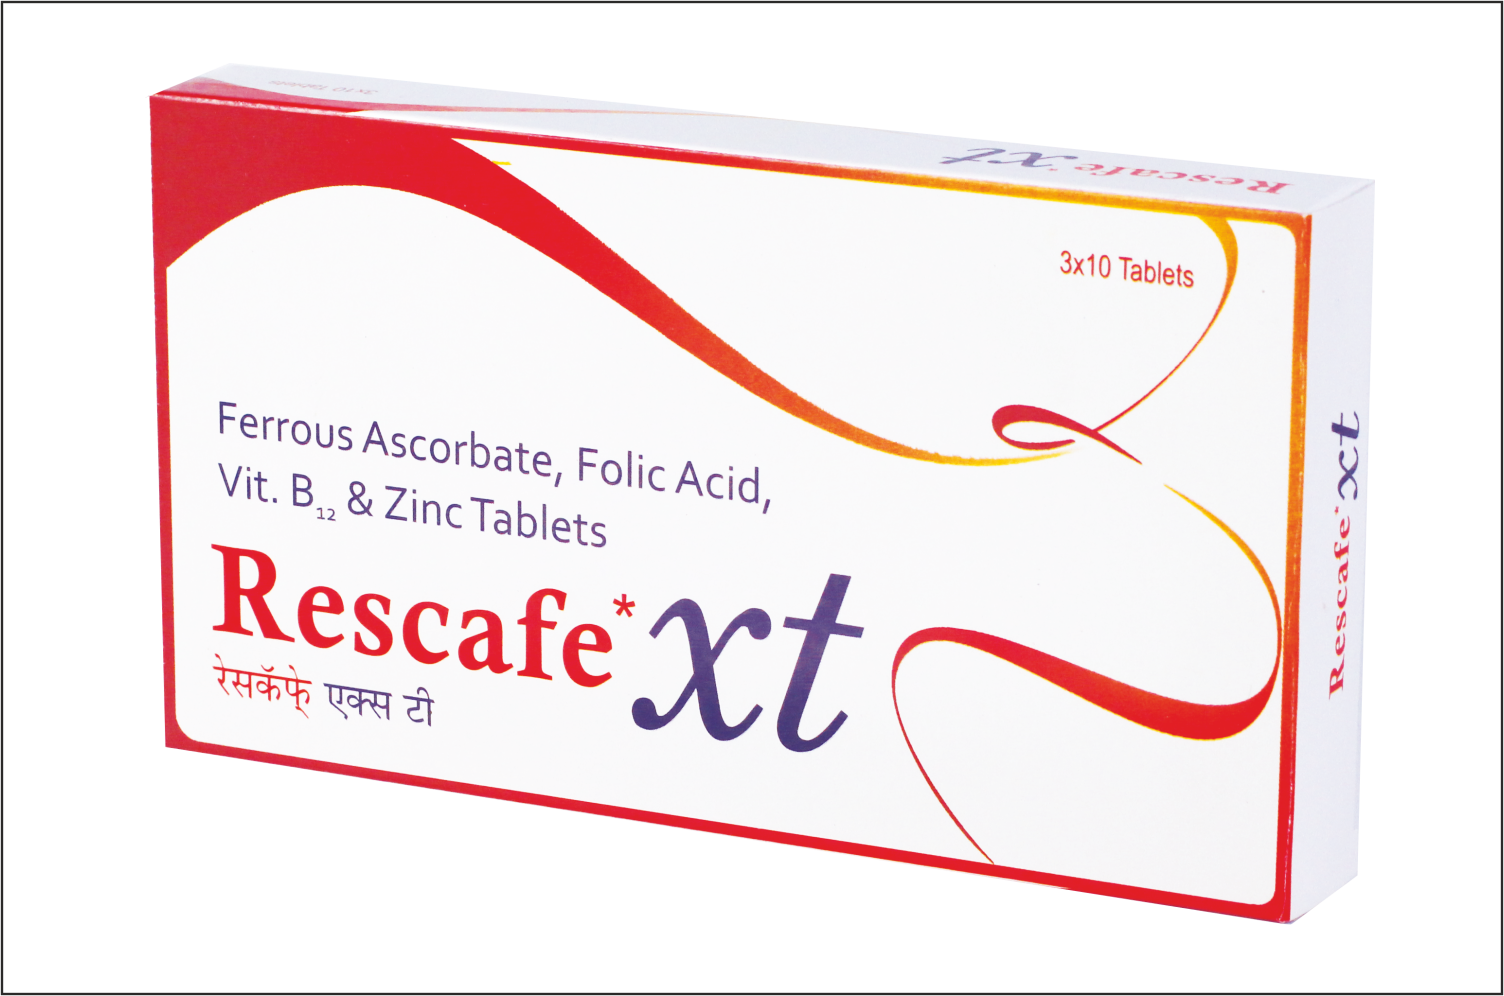 Rescafe XT tablets